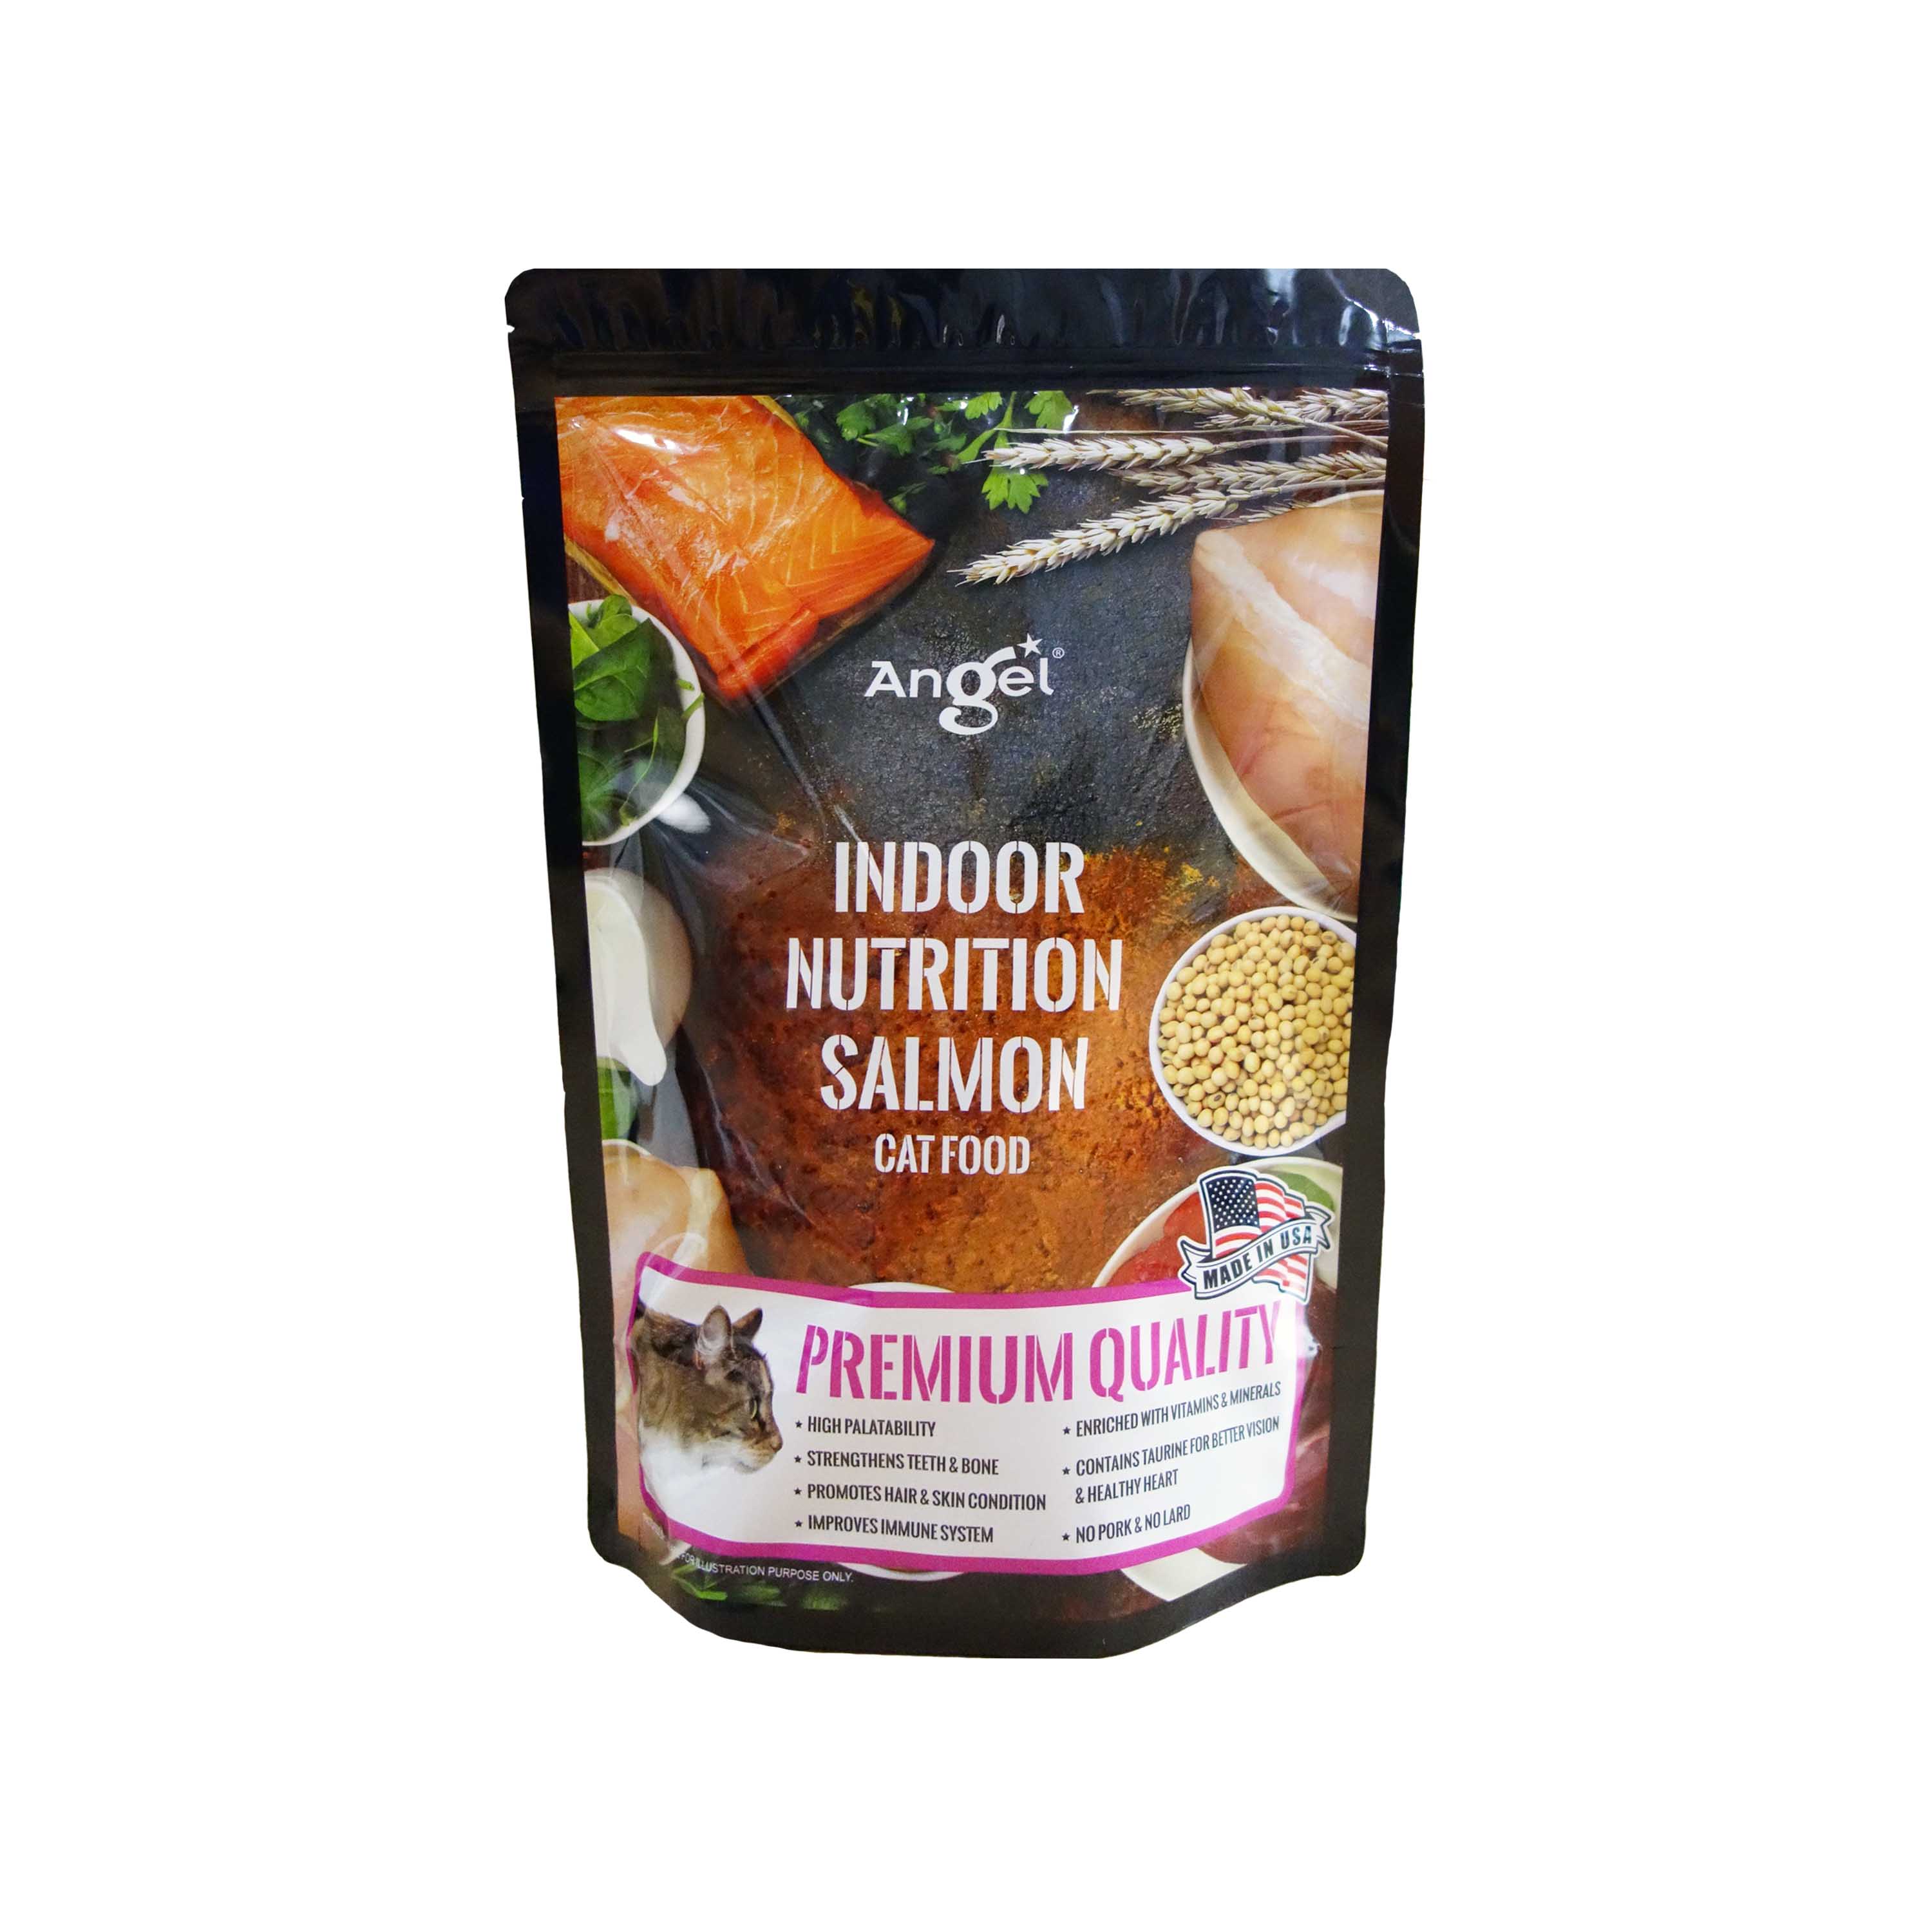 Angel Indoor Nutrition Salmon Cat Food 1.1Kg